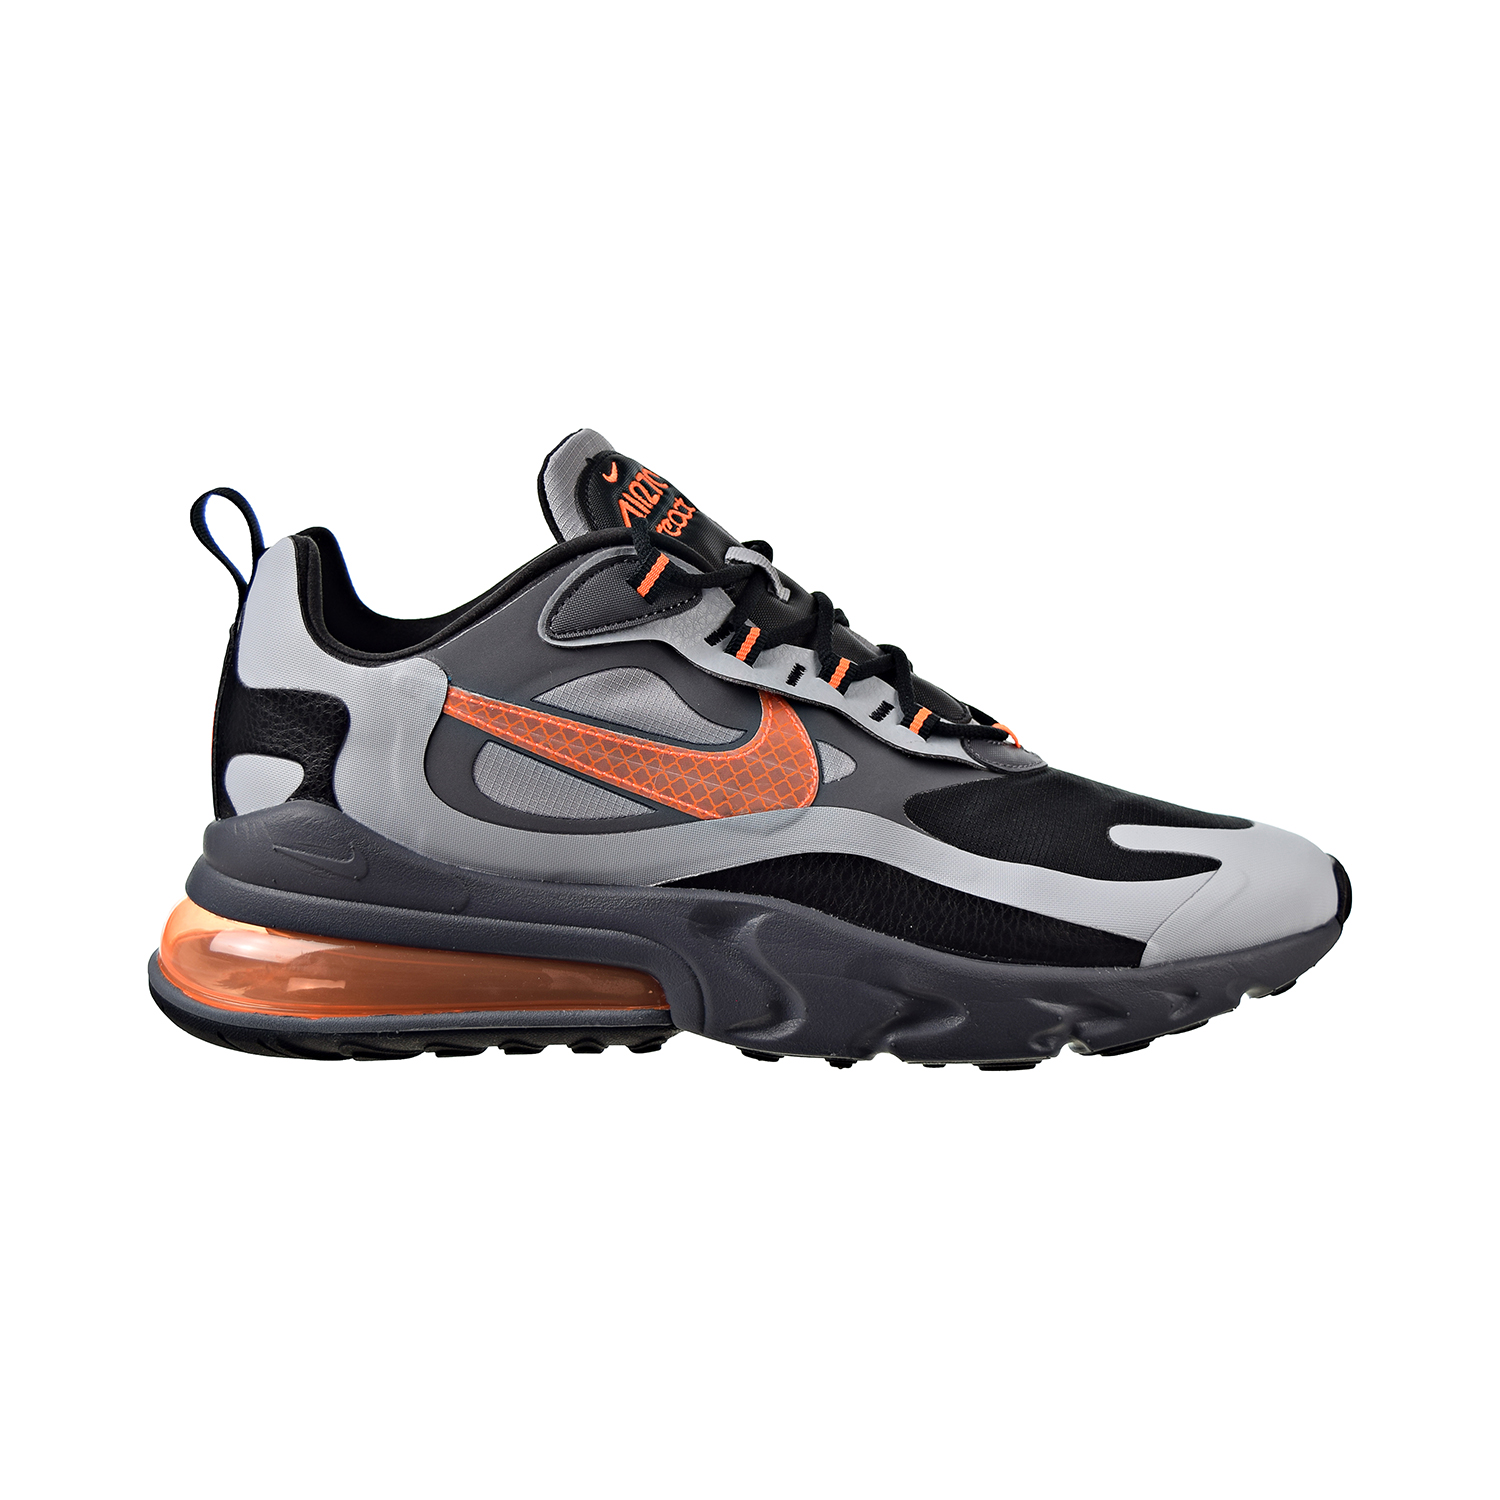 Nike Air Max 270 React Winter Casual Men's Shoes Wolf Grey-Total Orange-Black cd2049-006 - image 1 of 6